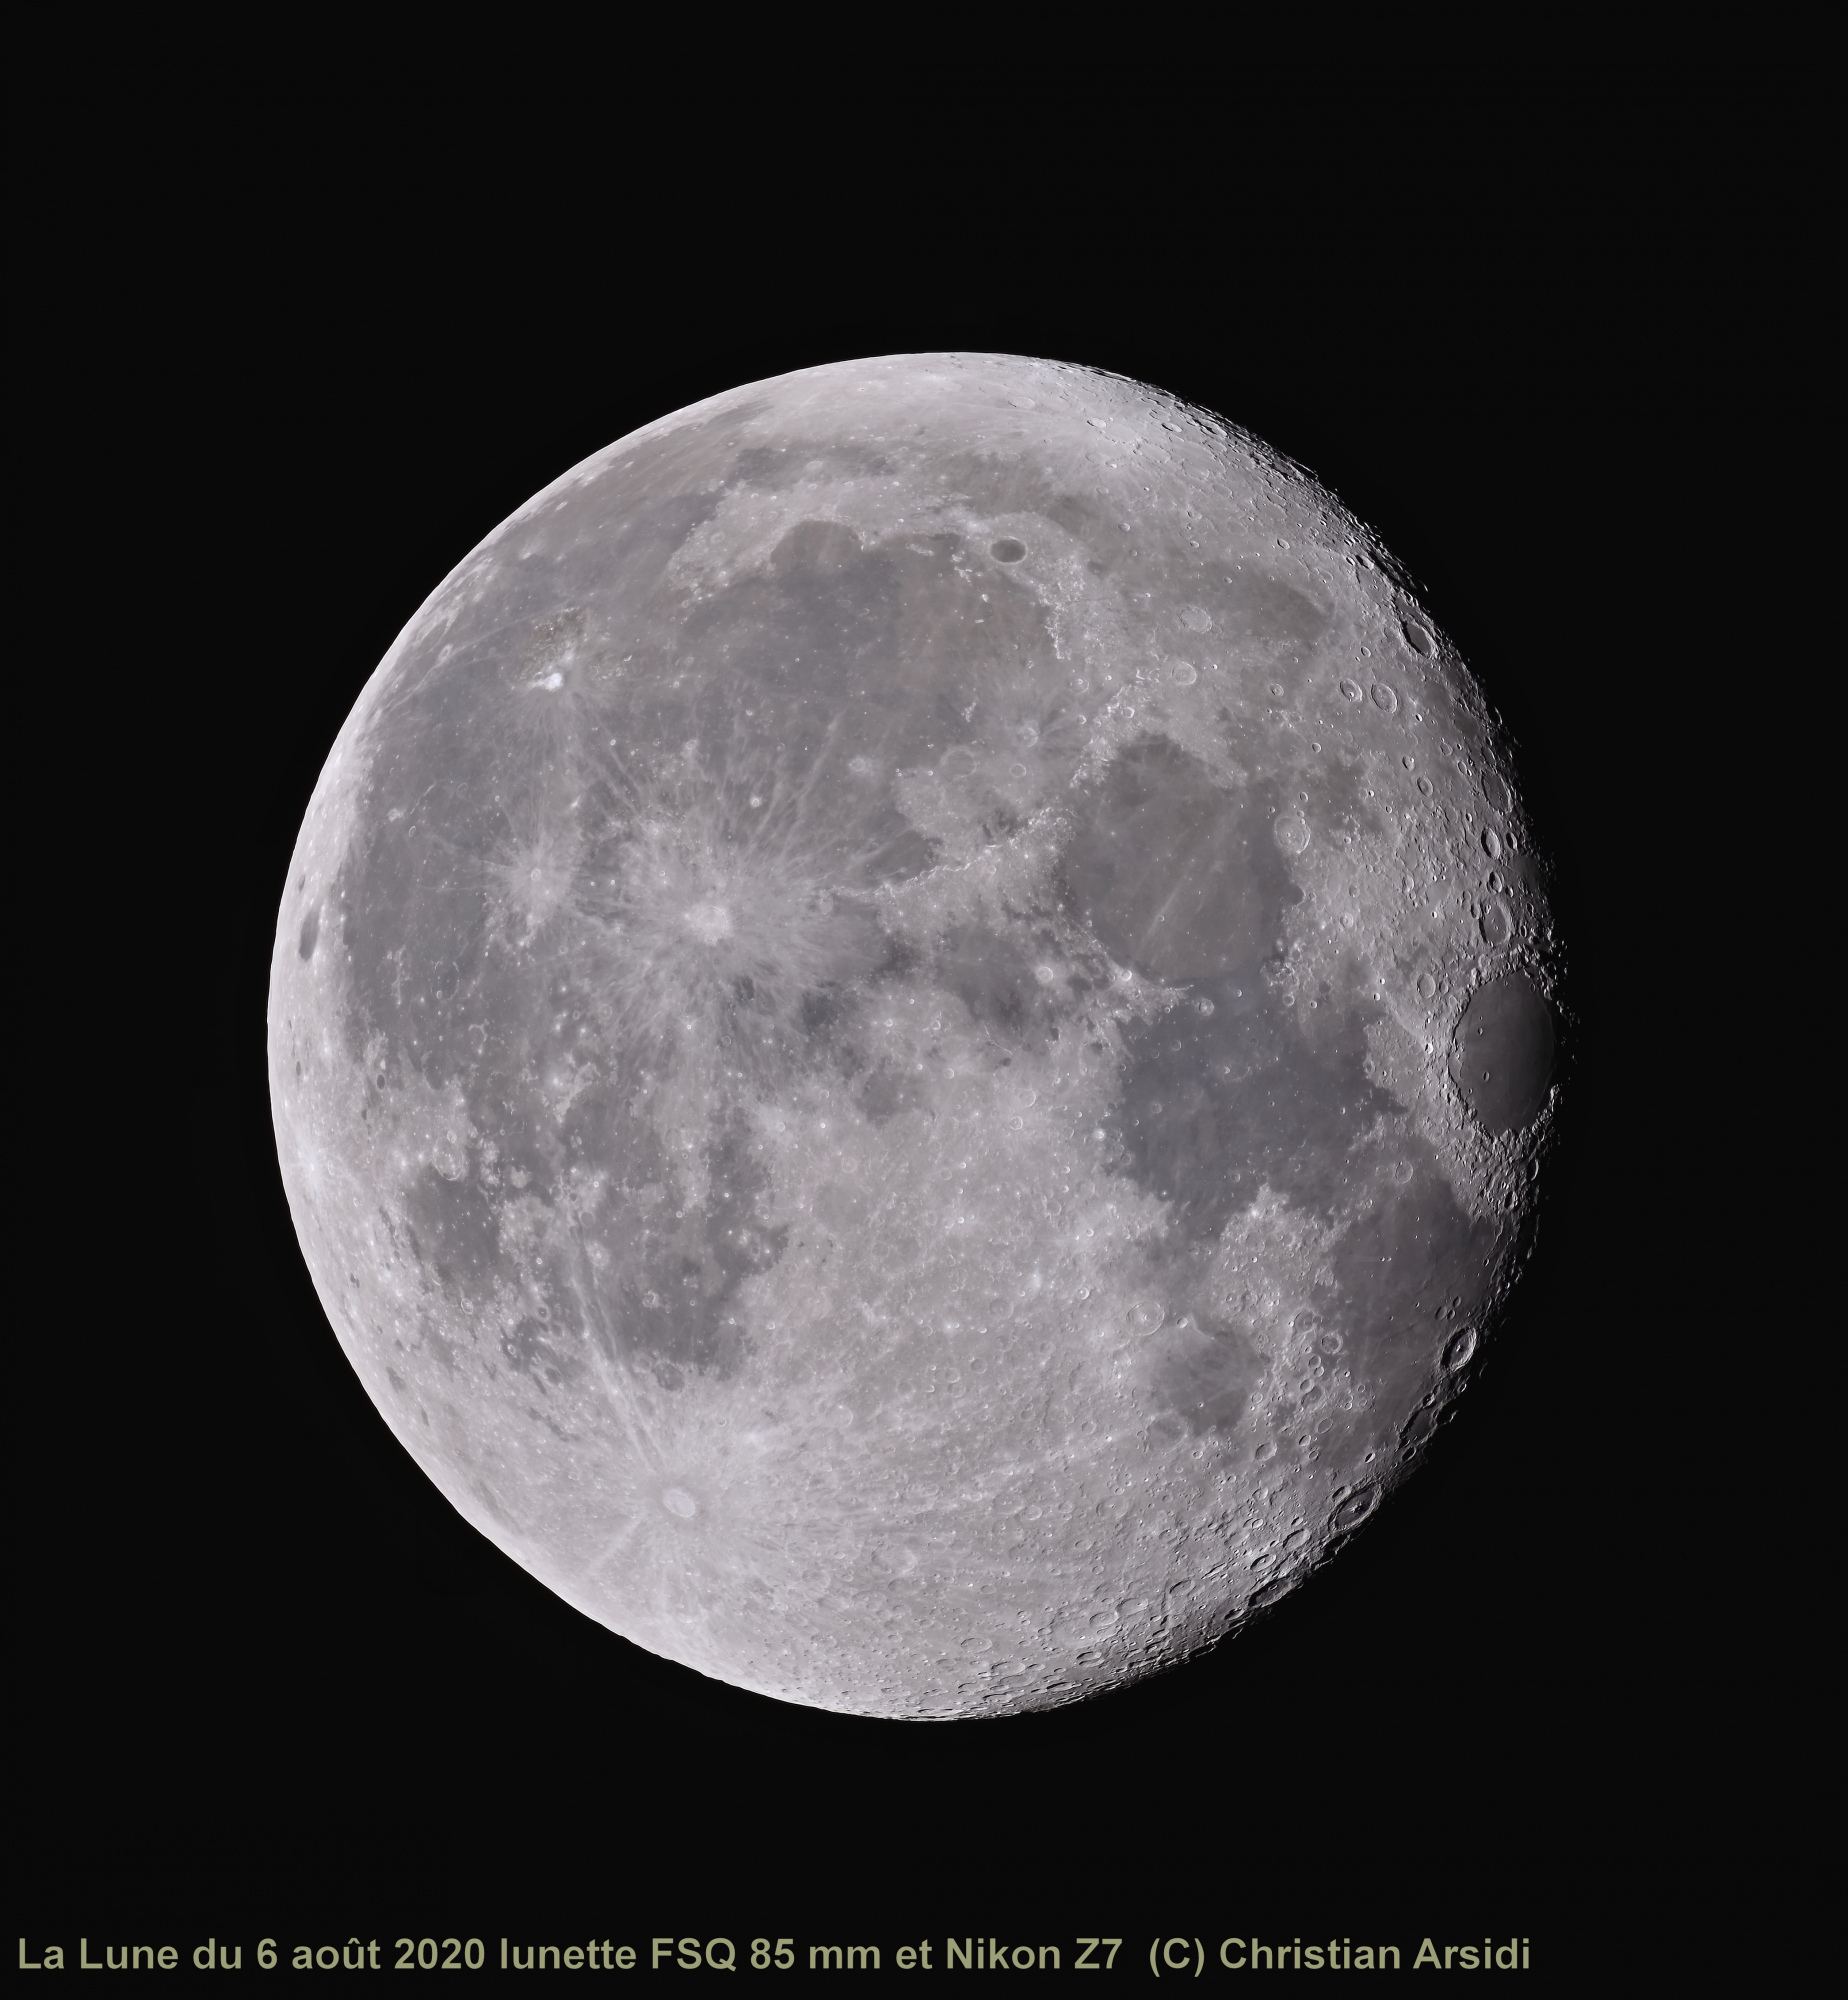 La Lune 35 images BV JPEG.jpg